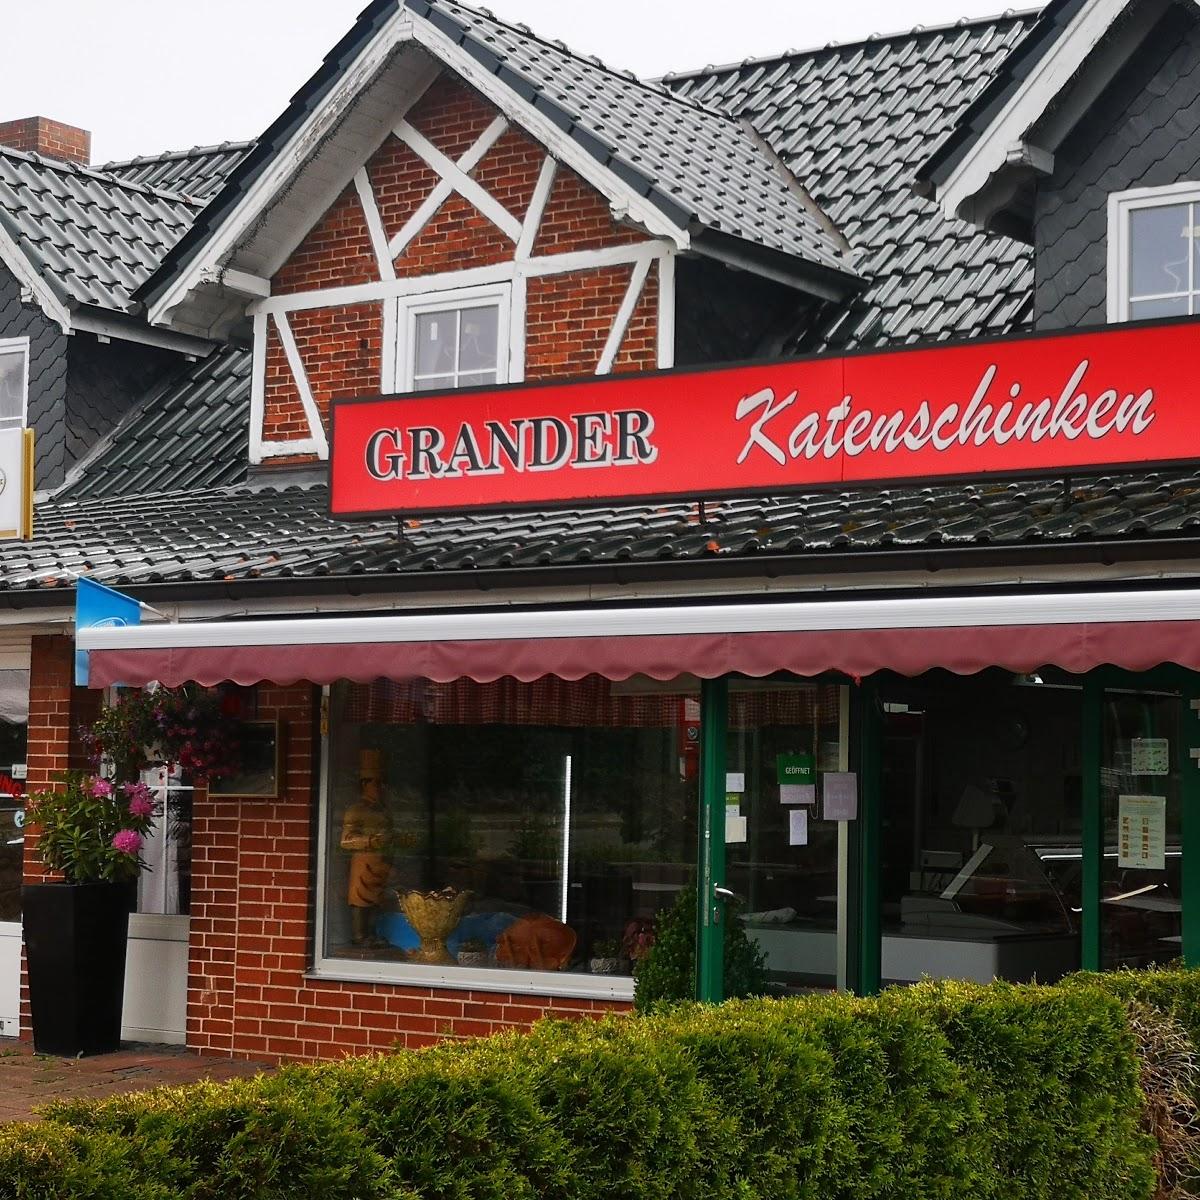 Restaurant "r Katenschinken" in  Grande